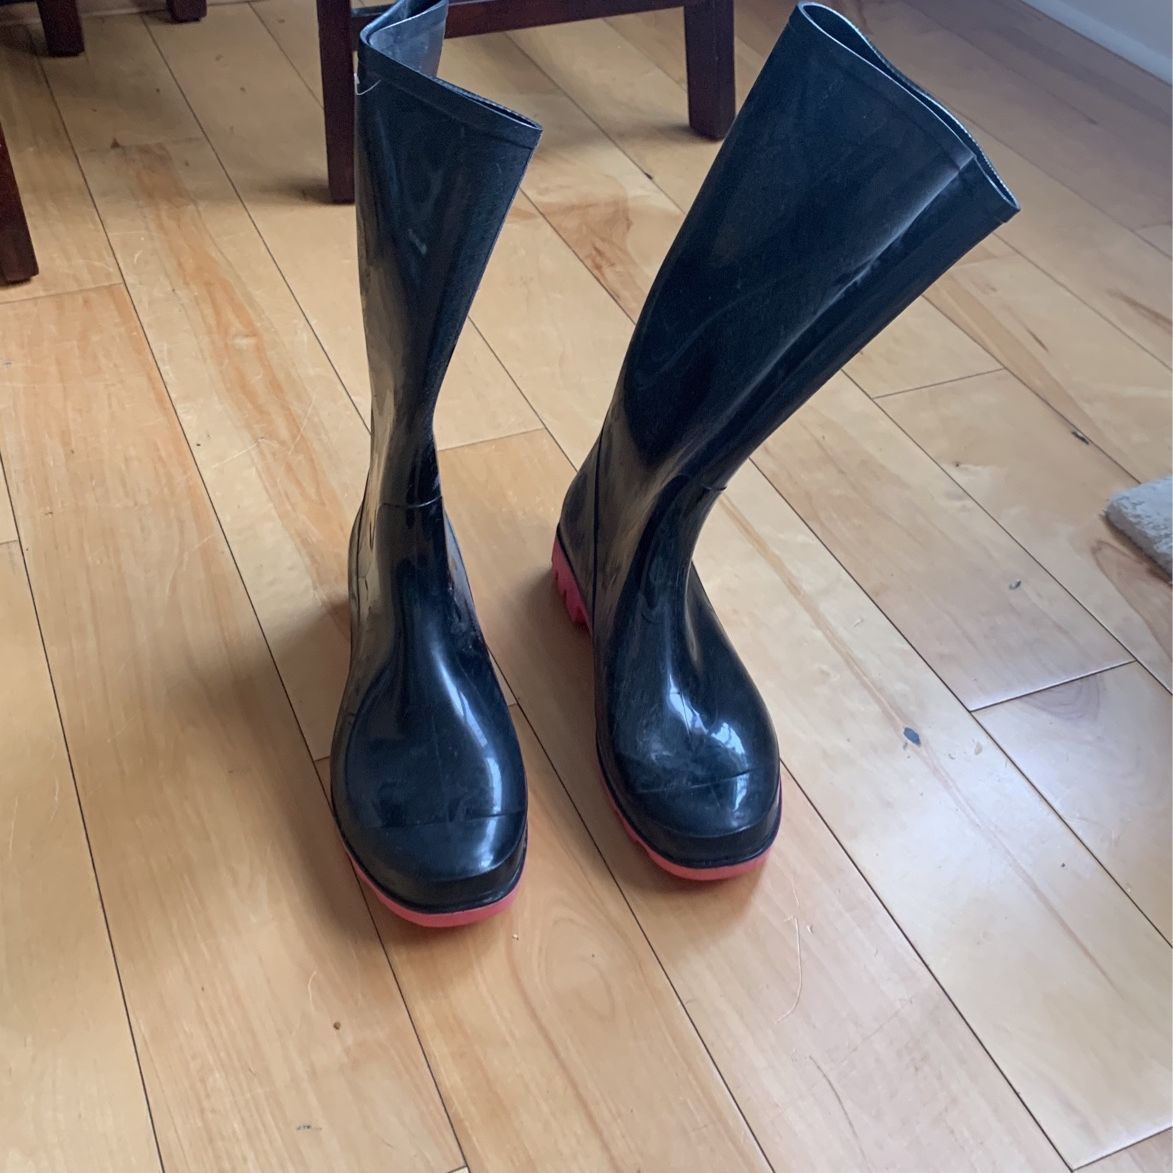 Barely Worn Rain Boots Size 11 Women’s